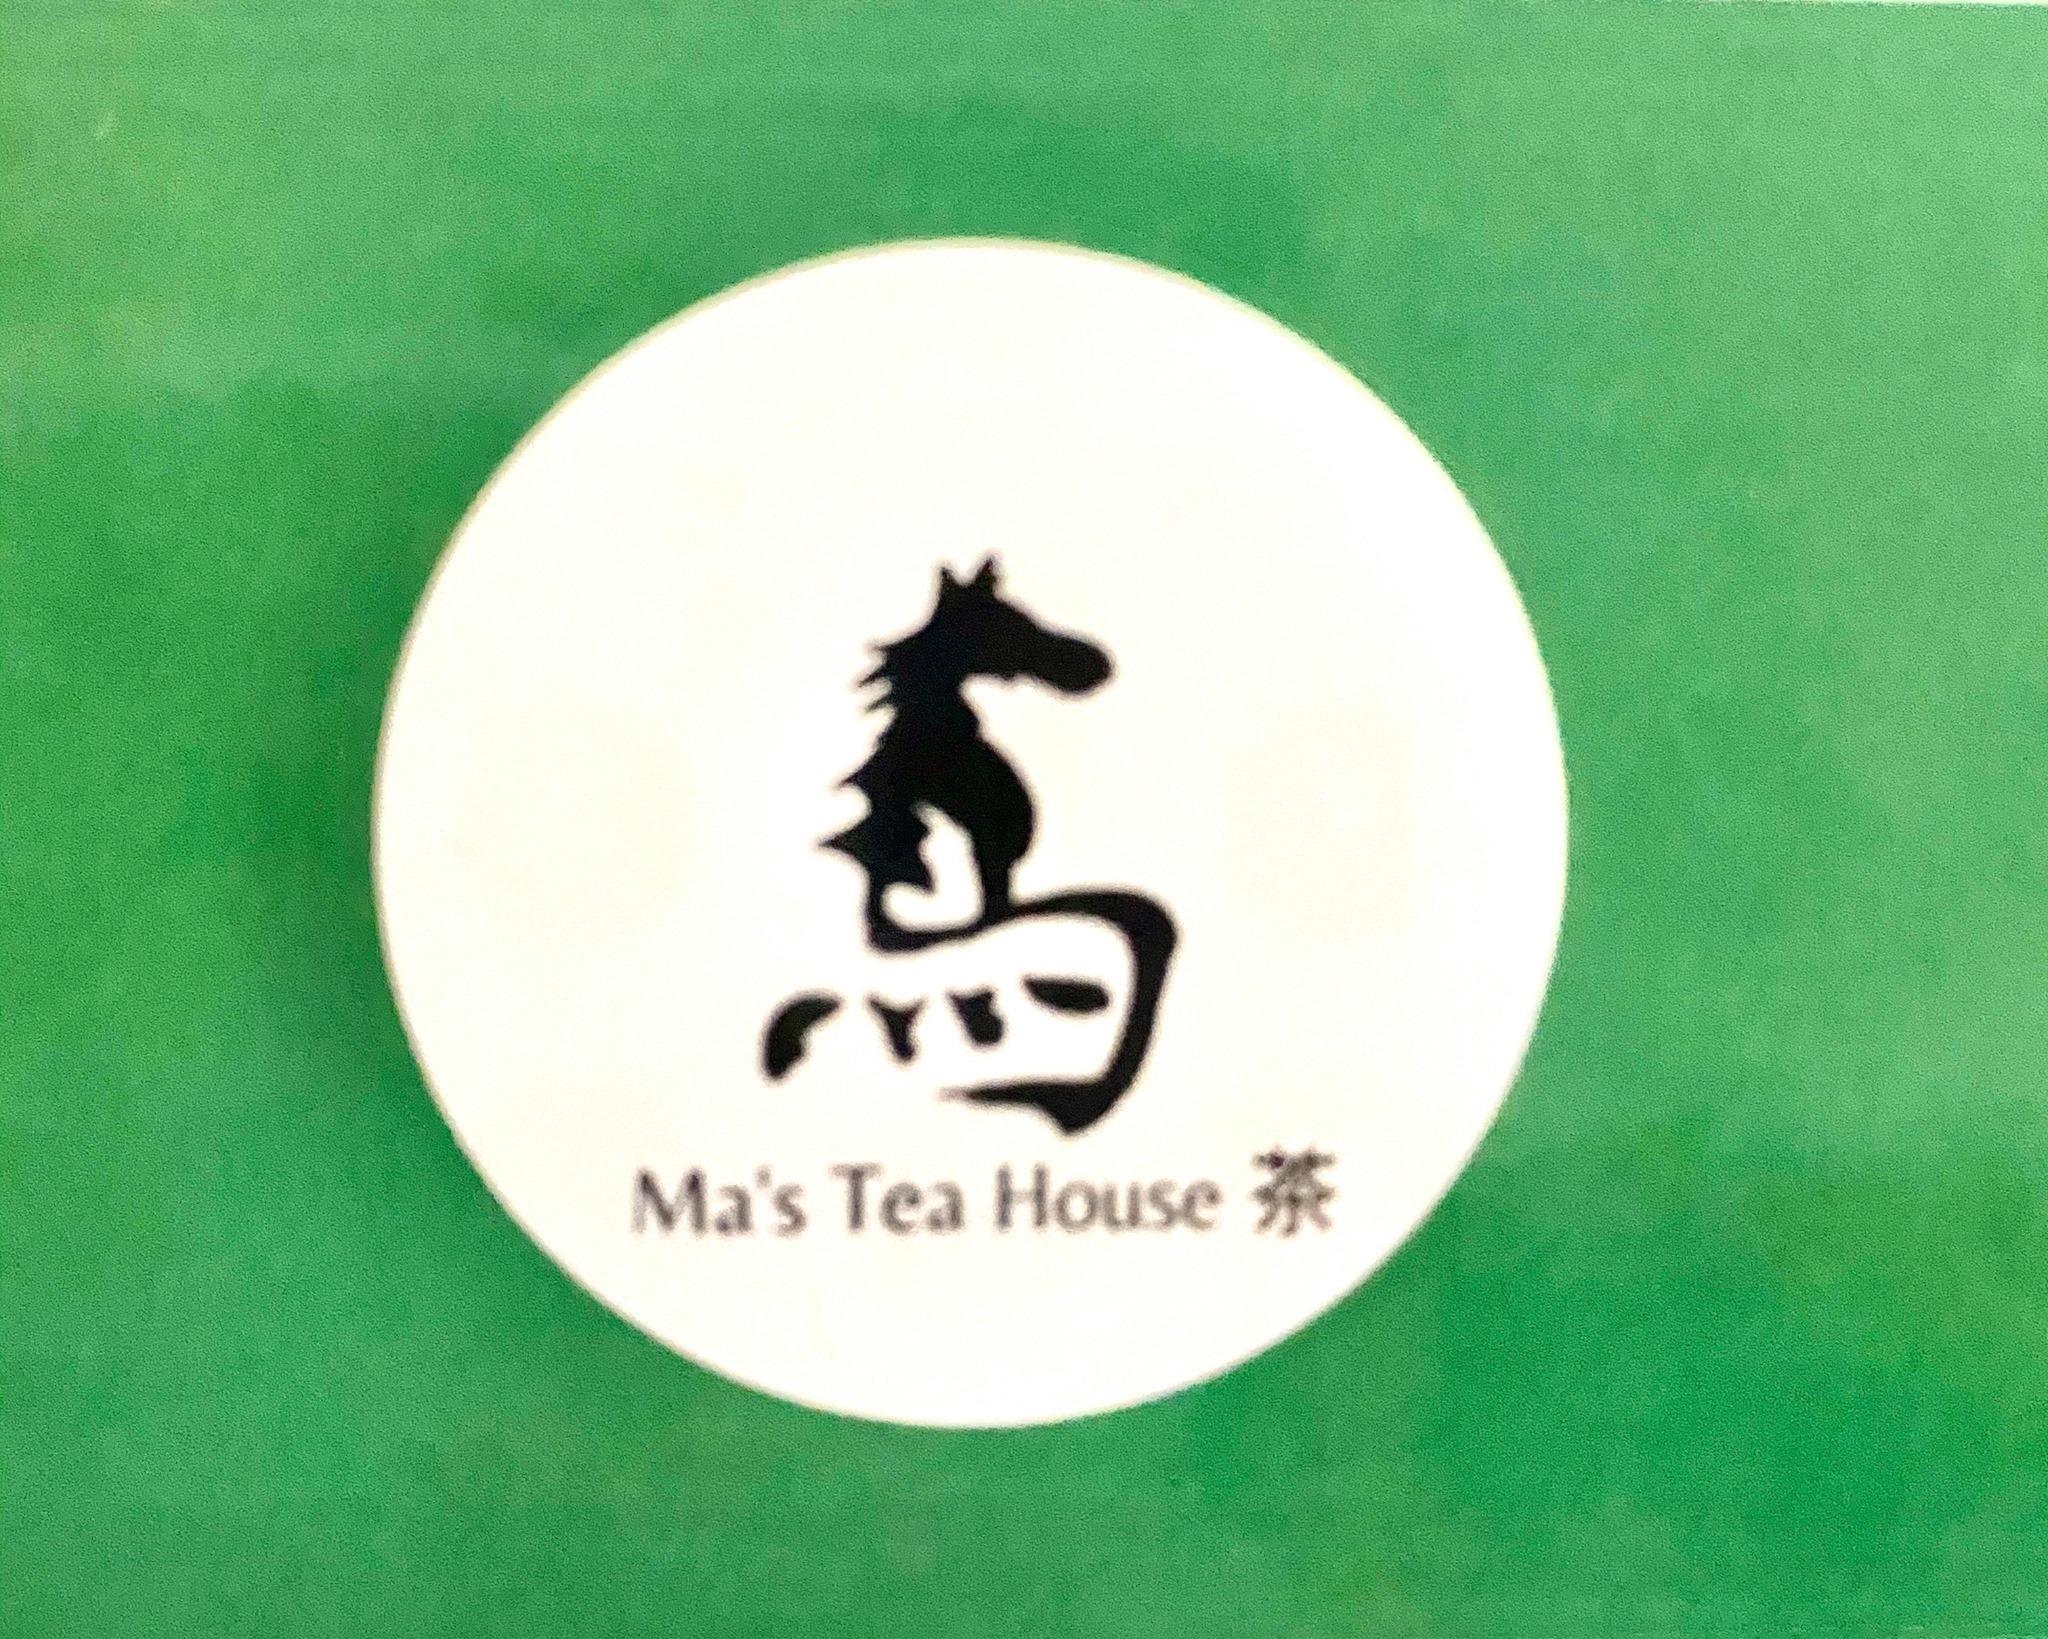 Ma's Tea House Elmwood Park